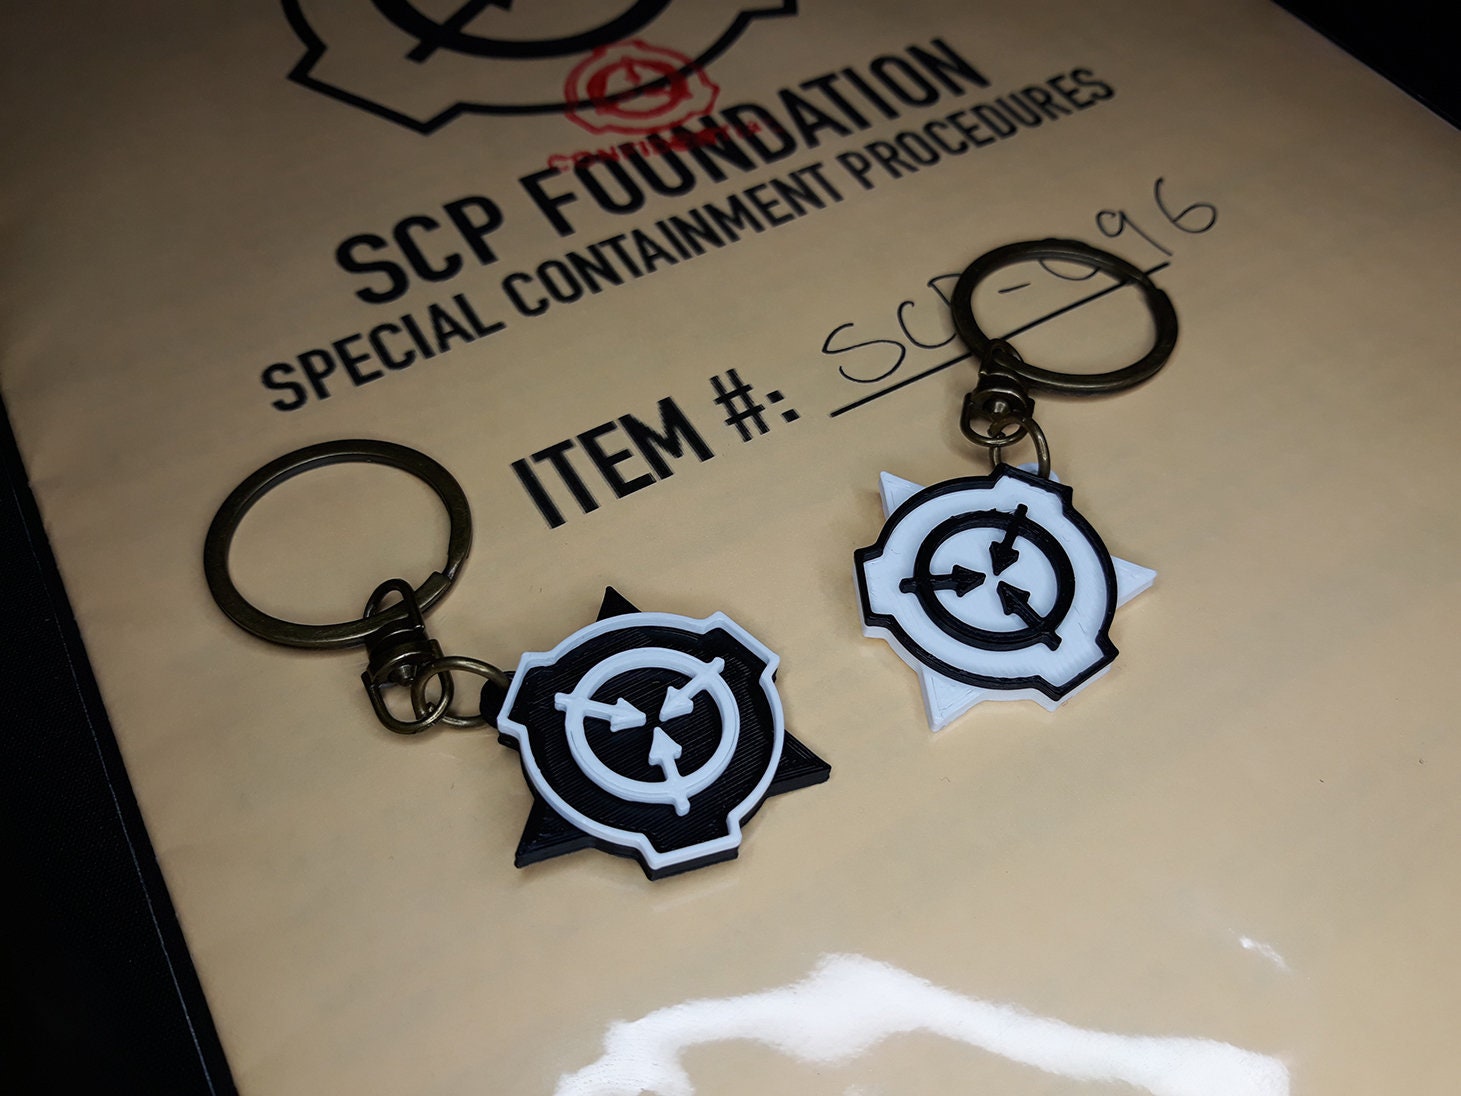 Keychain SCP Foundation Series 2 MTF Logos 24 Designs 3D 